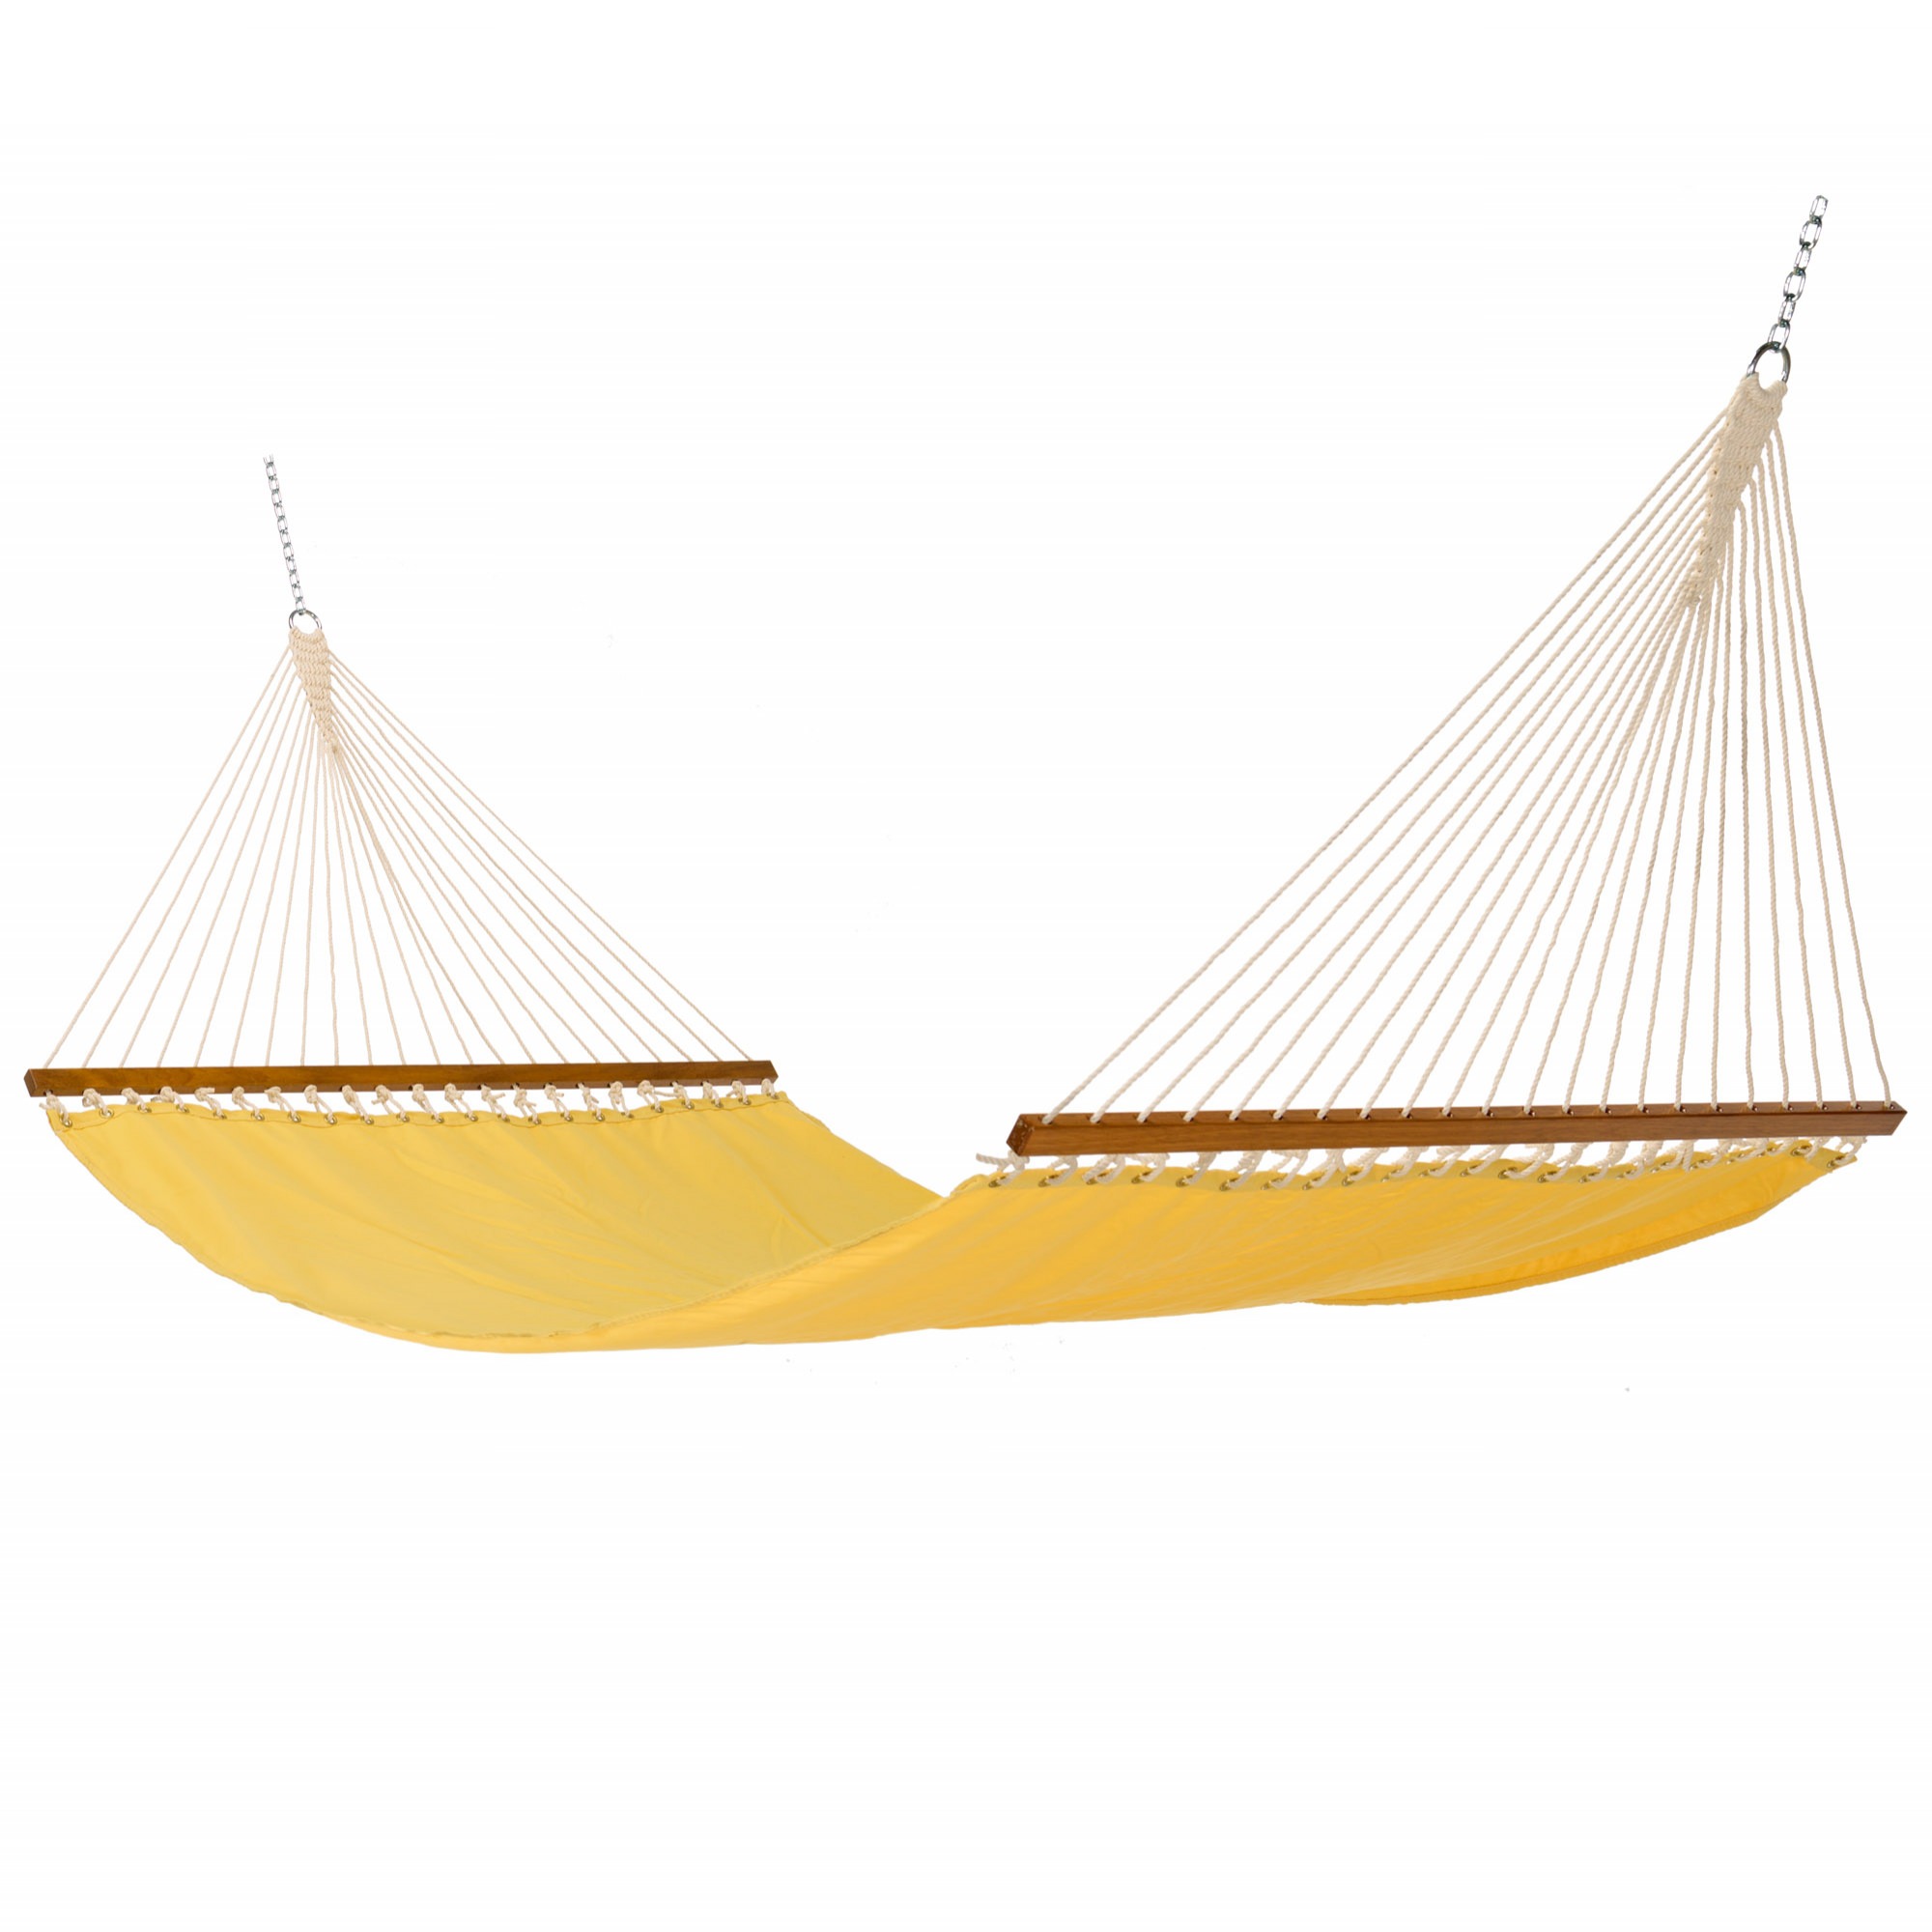 Single or double layer hammock